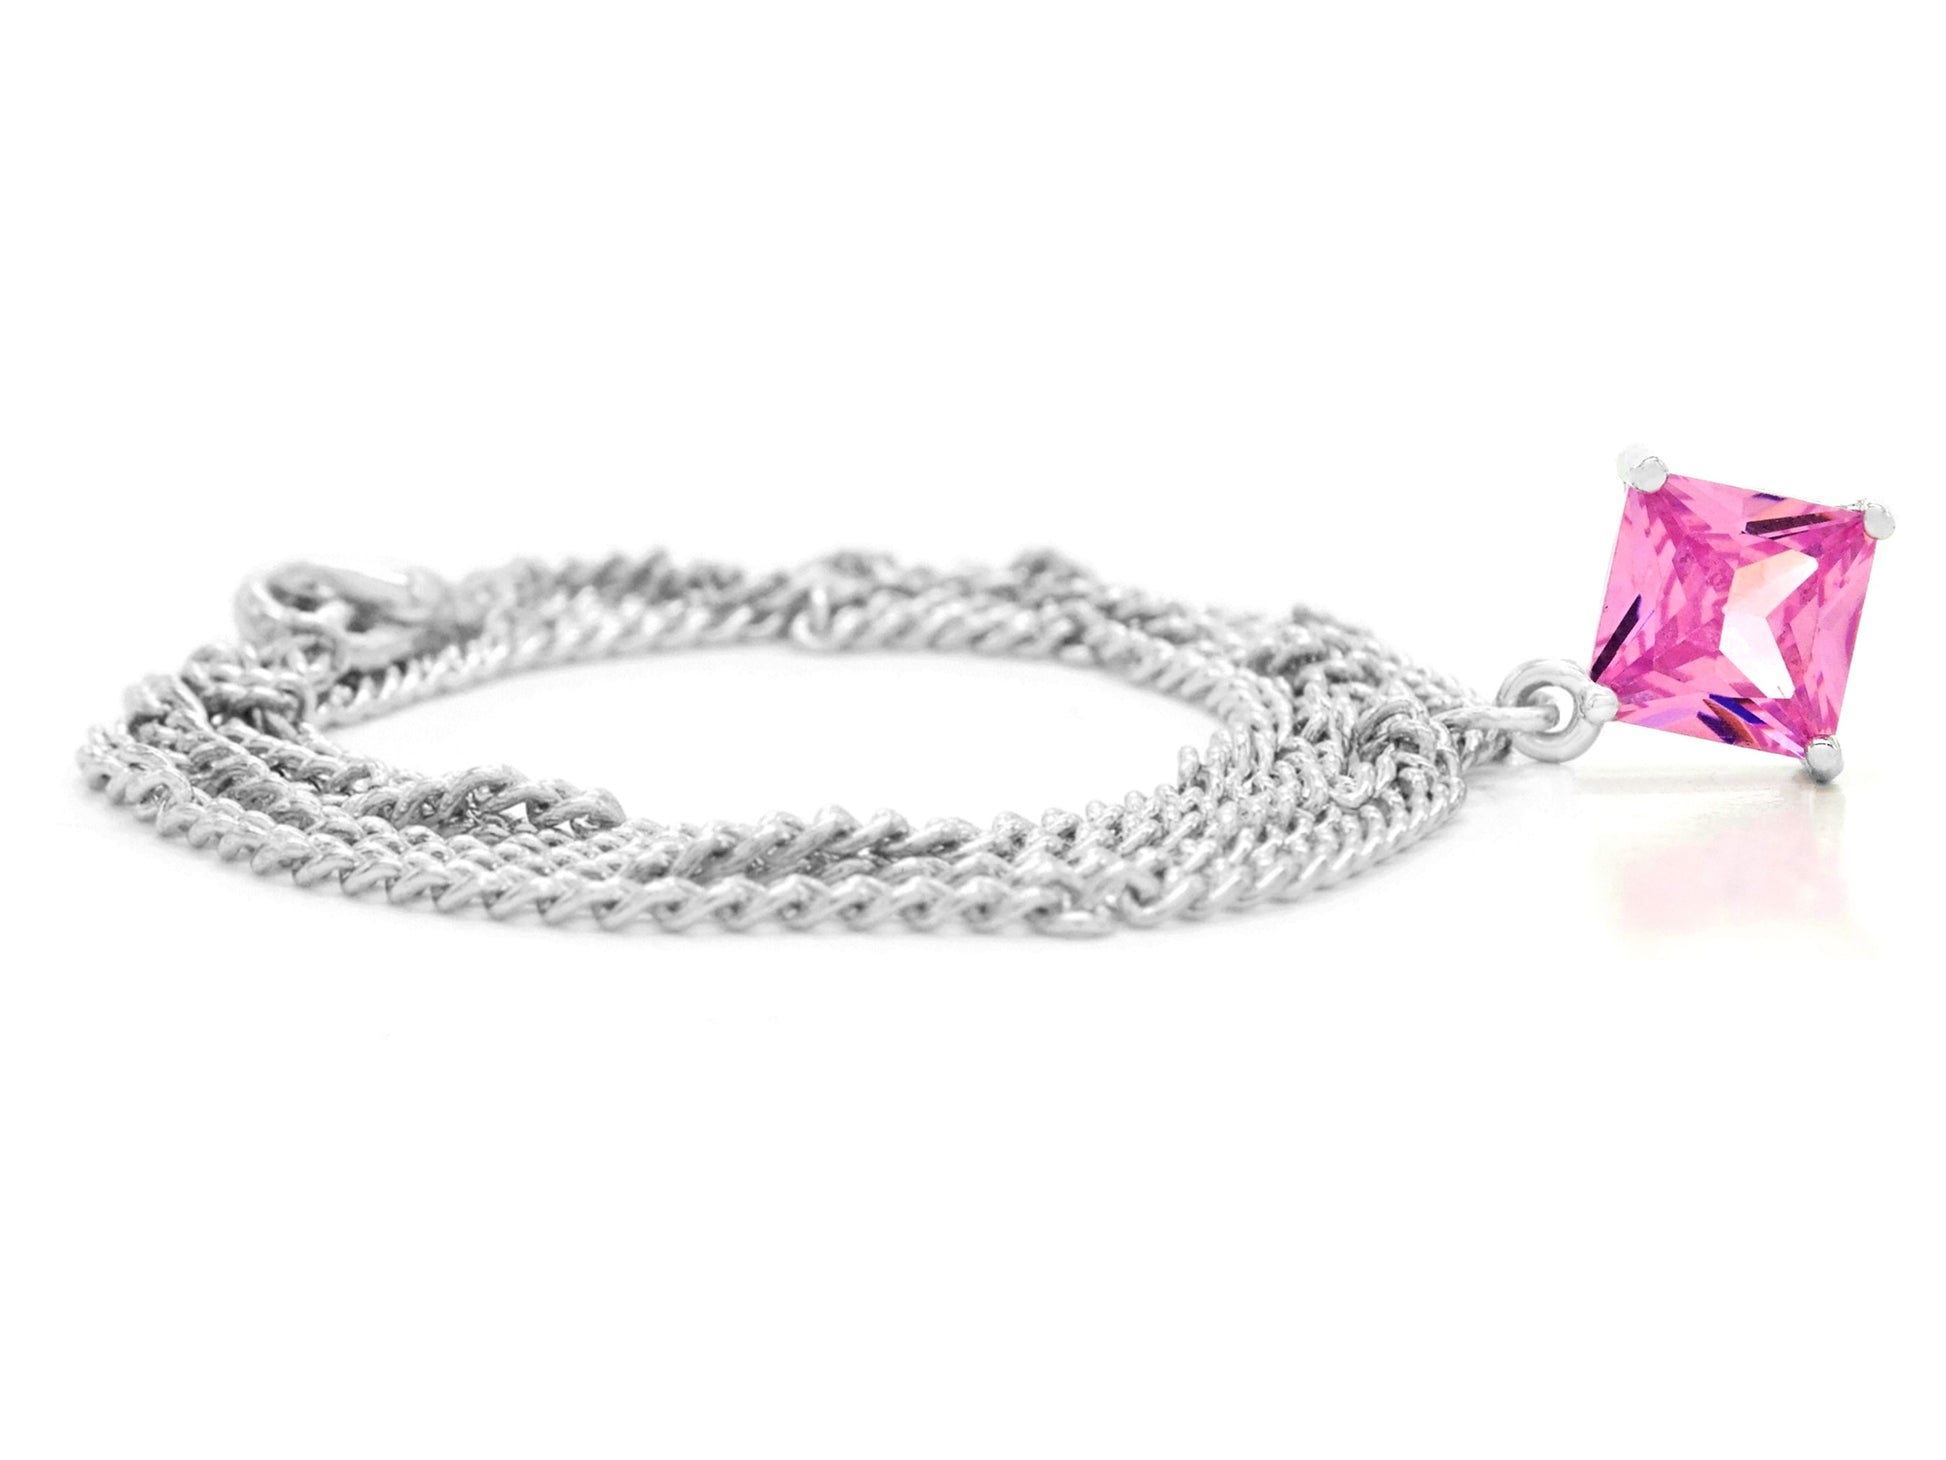 Pink gem princess white gold necklace FRONT